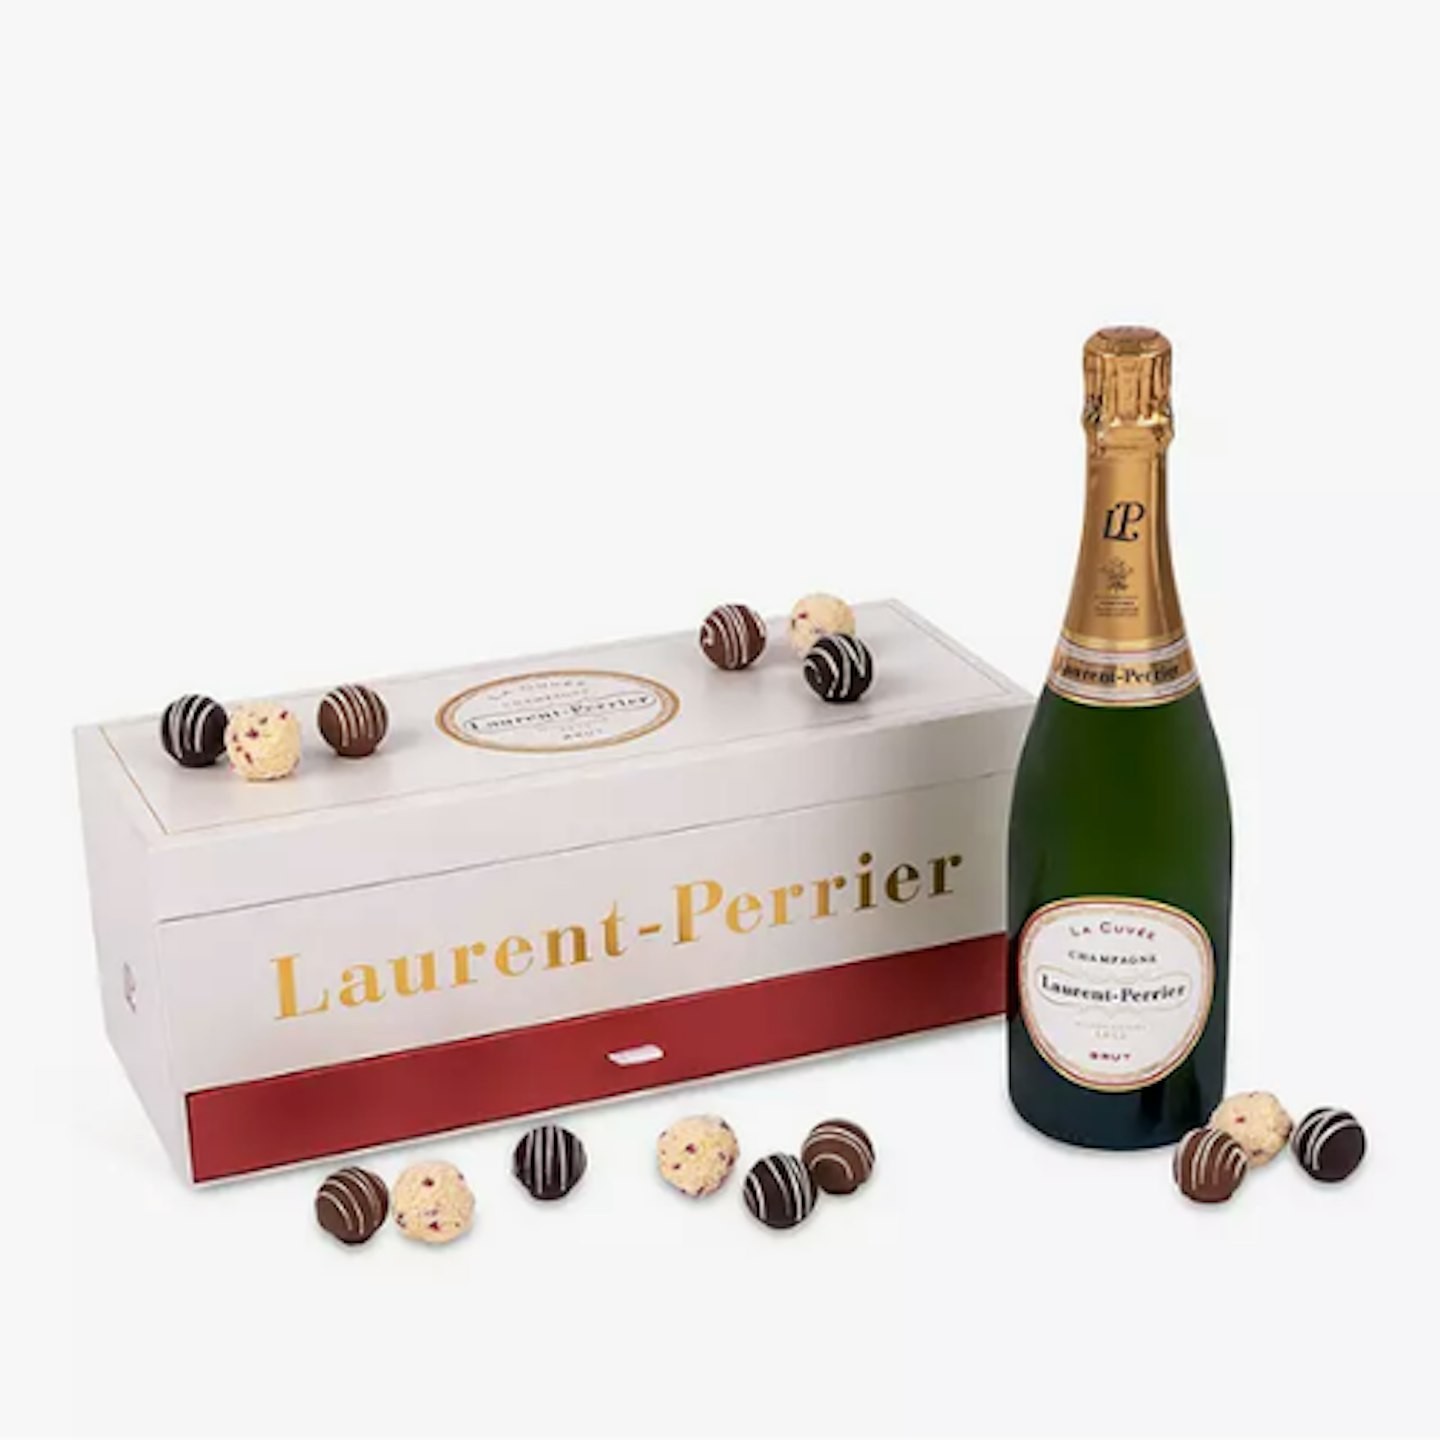 Laurent-Perrier Brut Champagne and Montezuma's Truffle Set, 75cl